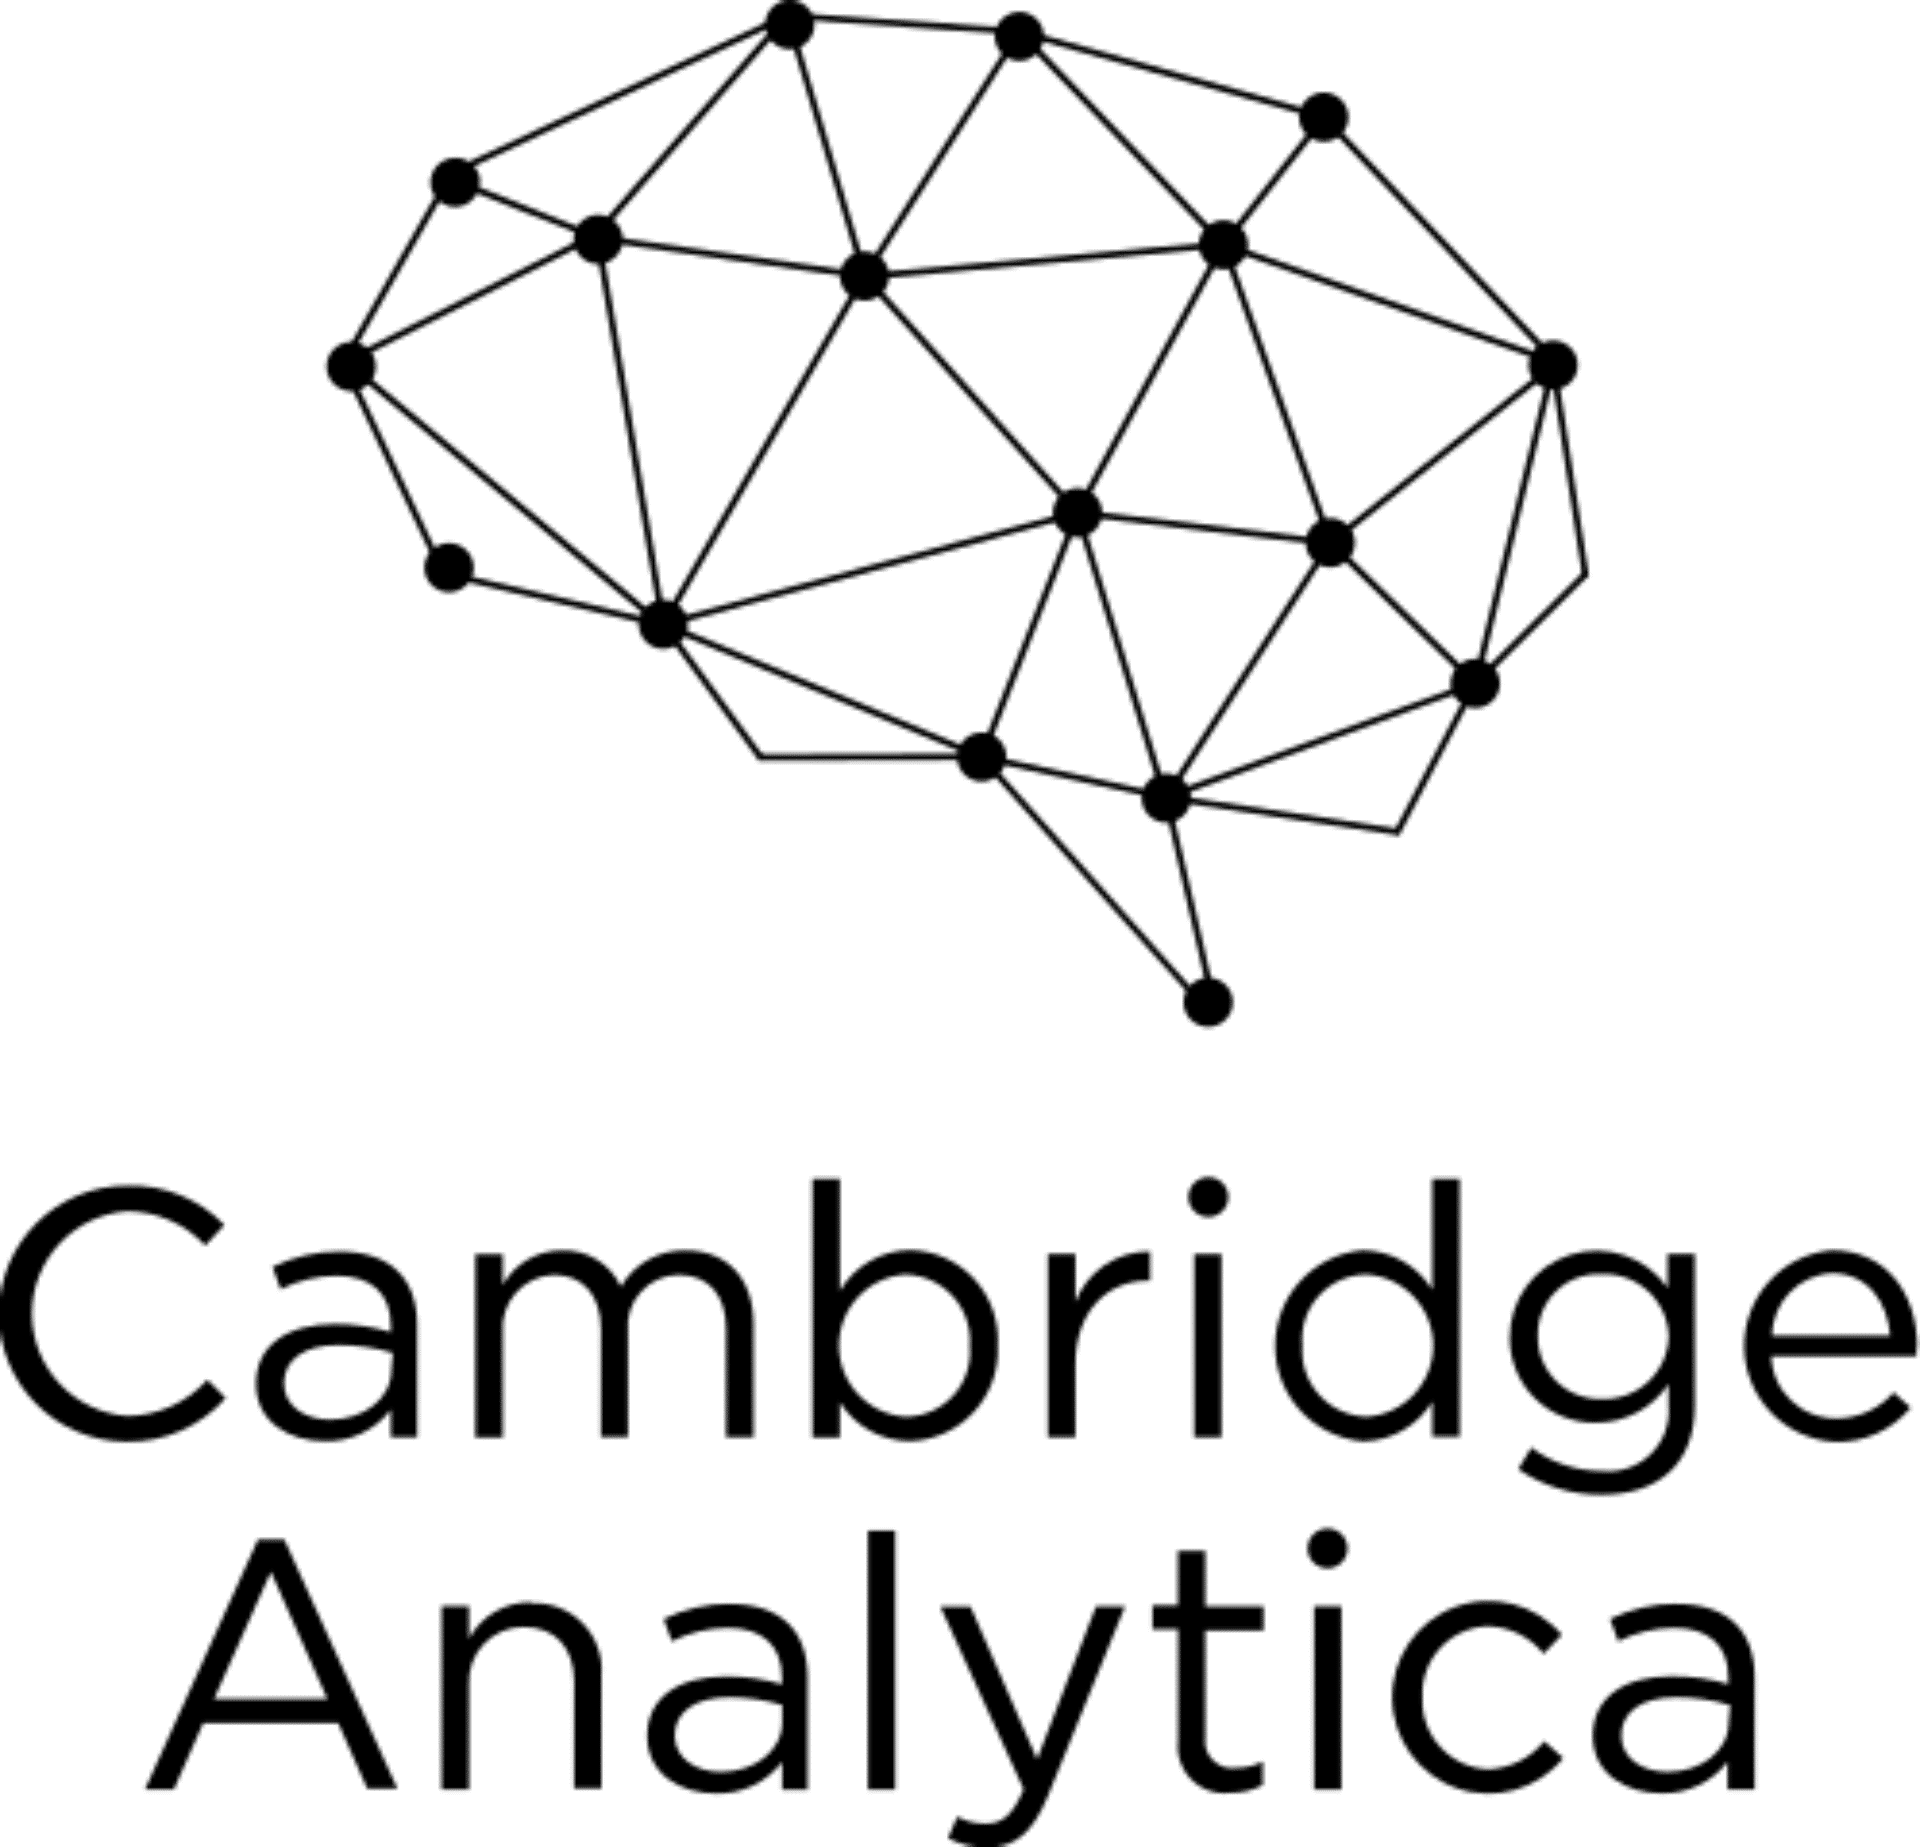 Logotip družbe Cambridge Analytica.